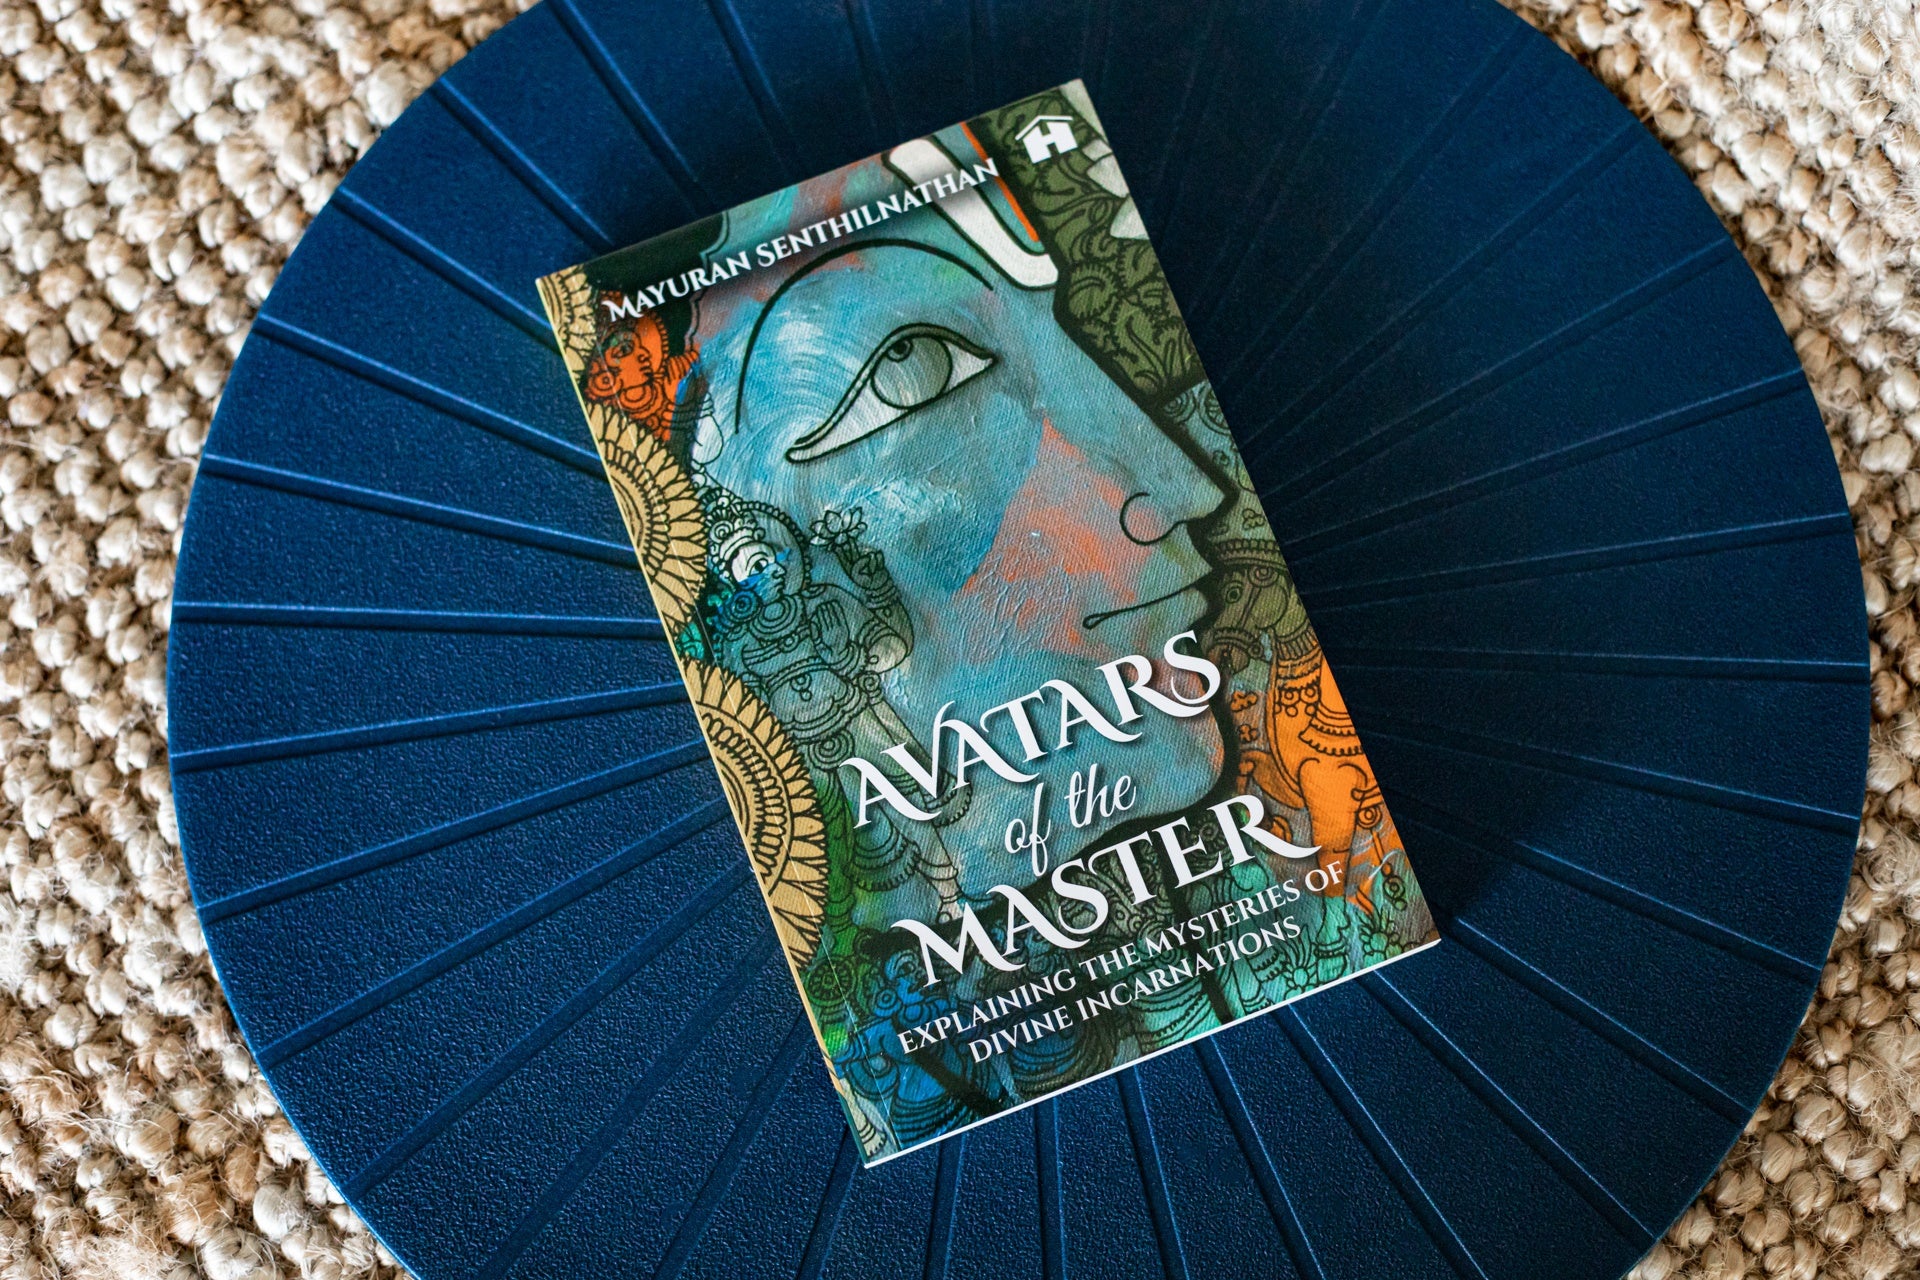 Avatars of the Master: Explaining the Mysteries of Divine Incarnations